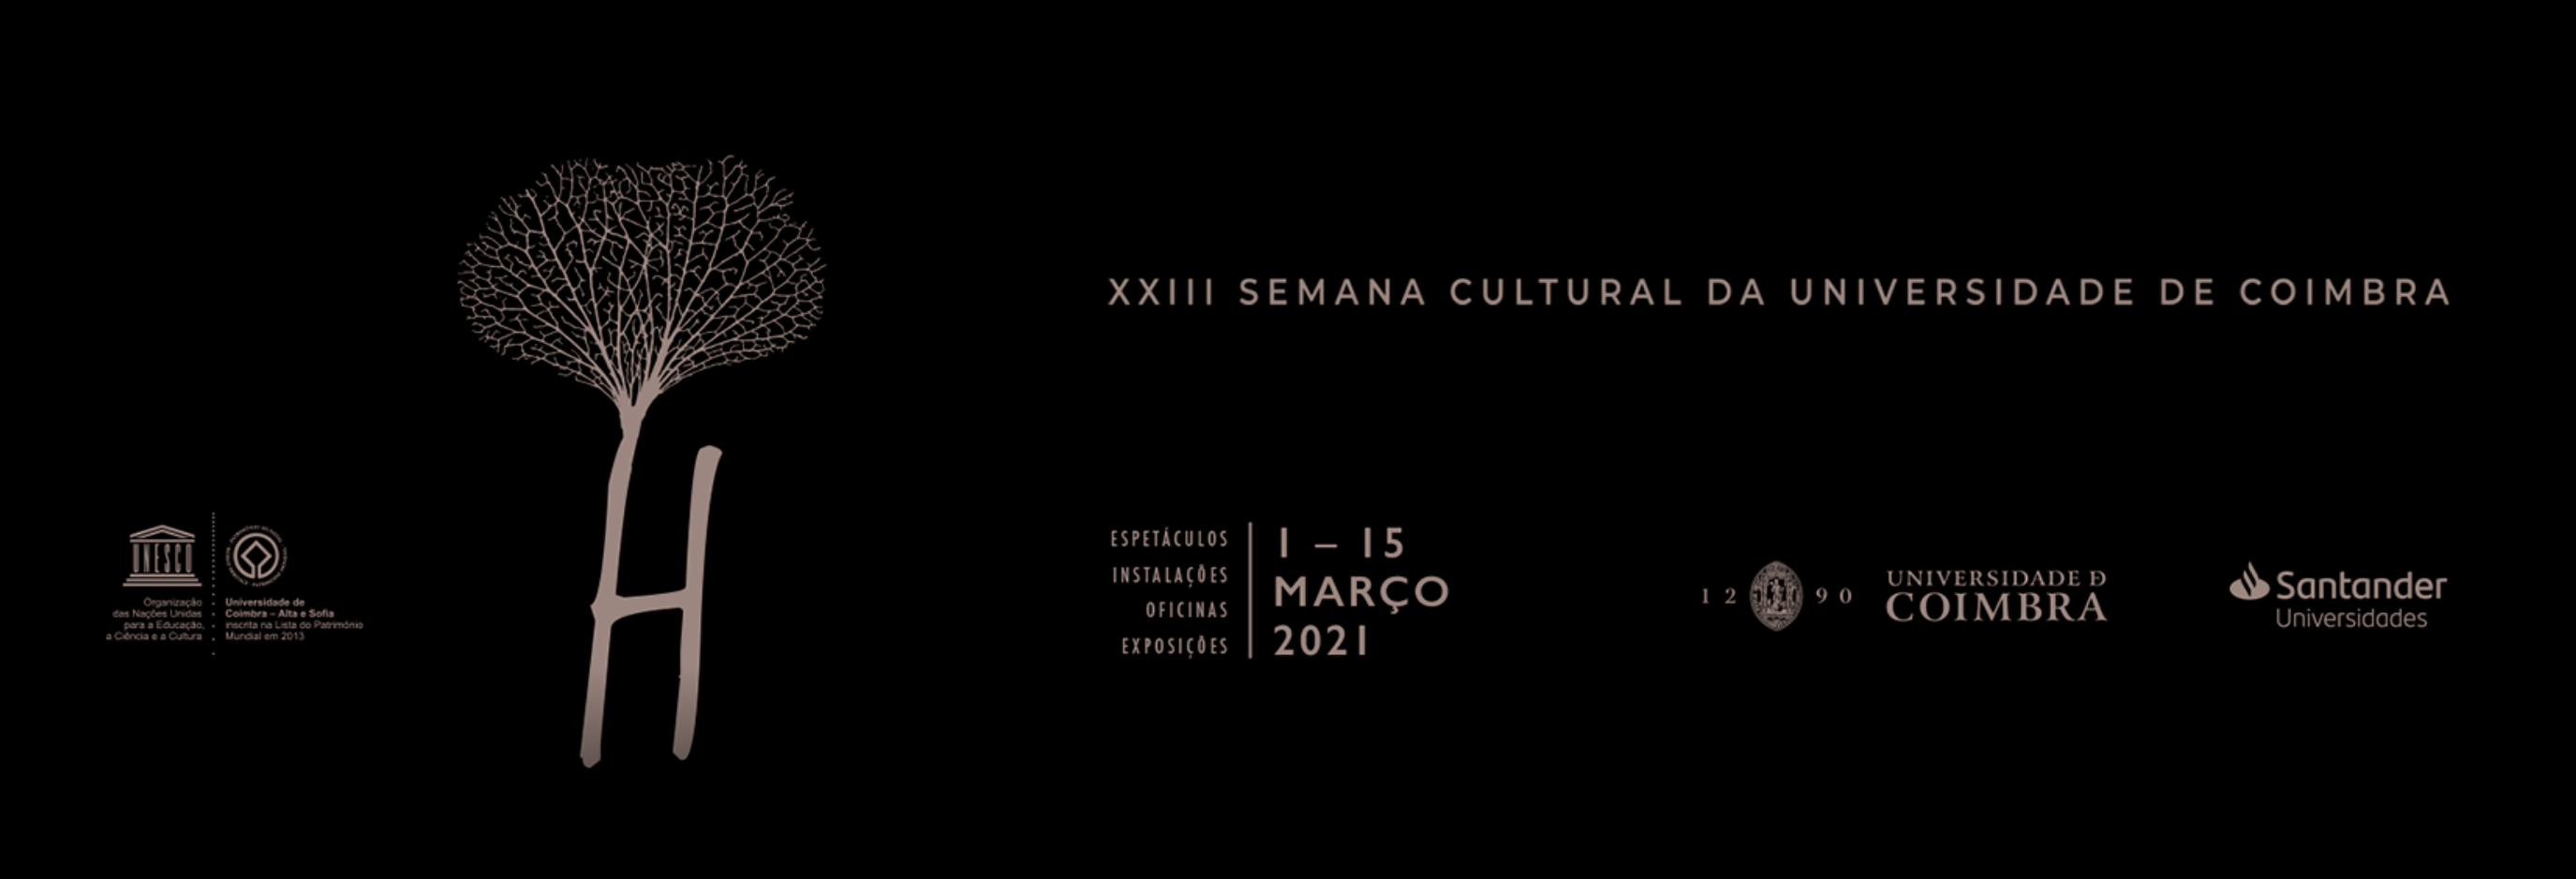 XXIII Semana Cultural da Universidade de Coimbra apresenta programa multidisciplinar em formato online